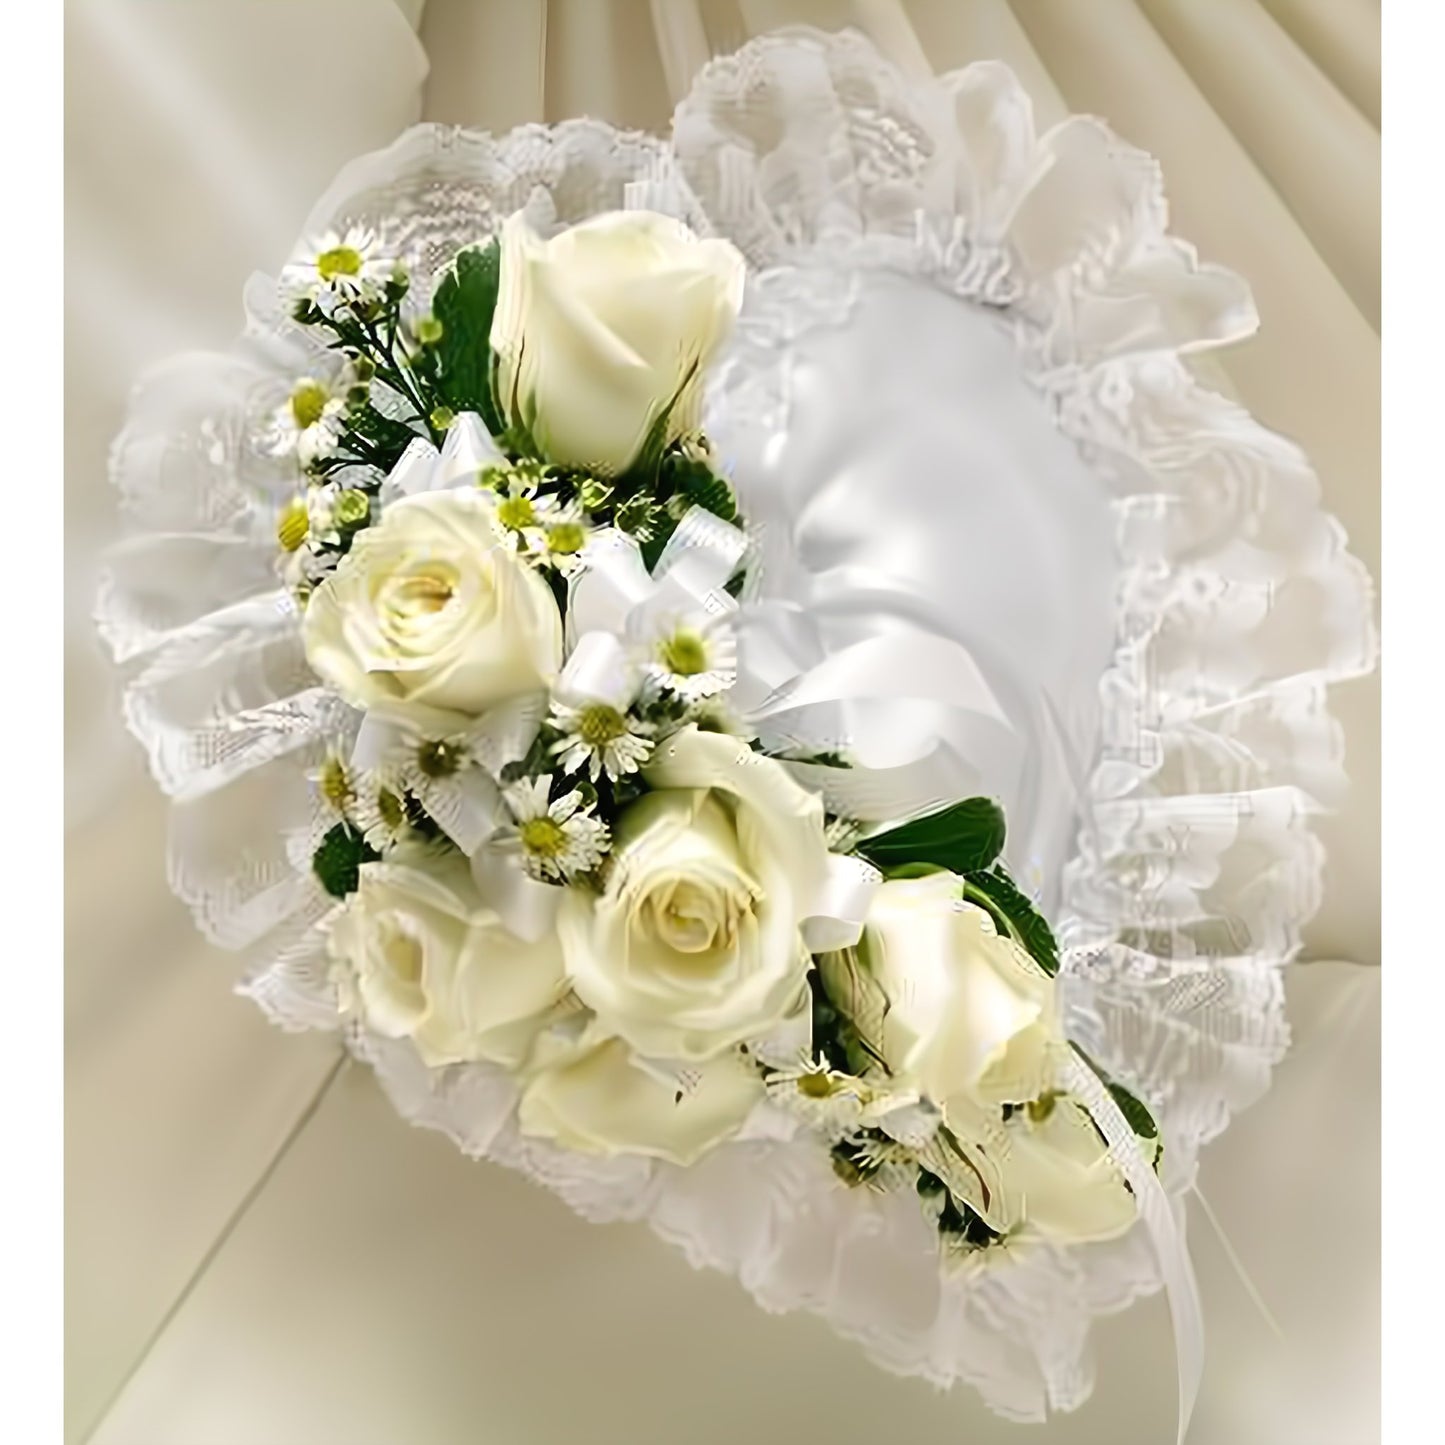 White Satin Heart Casket Pillow - Floral Arrangement - Flower Delivery Brooklyn